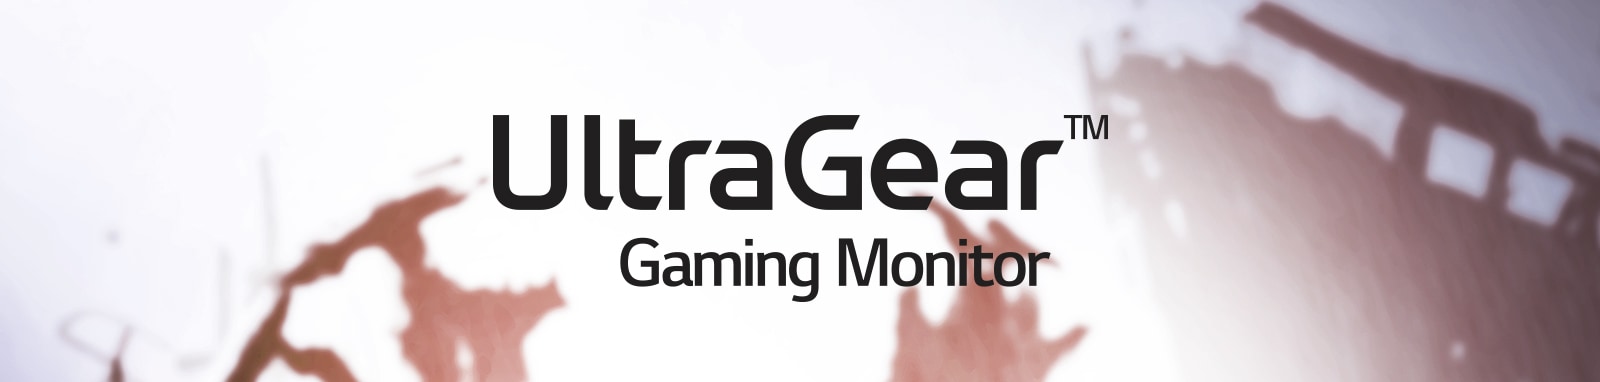 MNT-UltraGear-24GL600F-01-UltraGear-Desktop